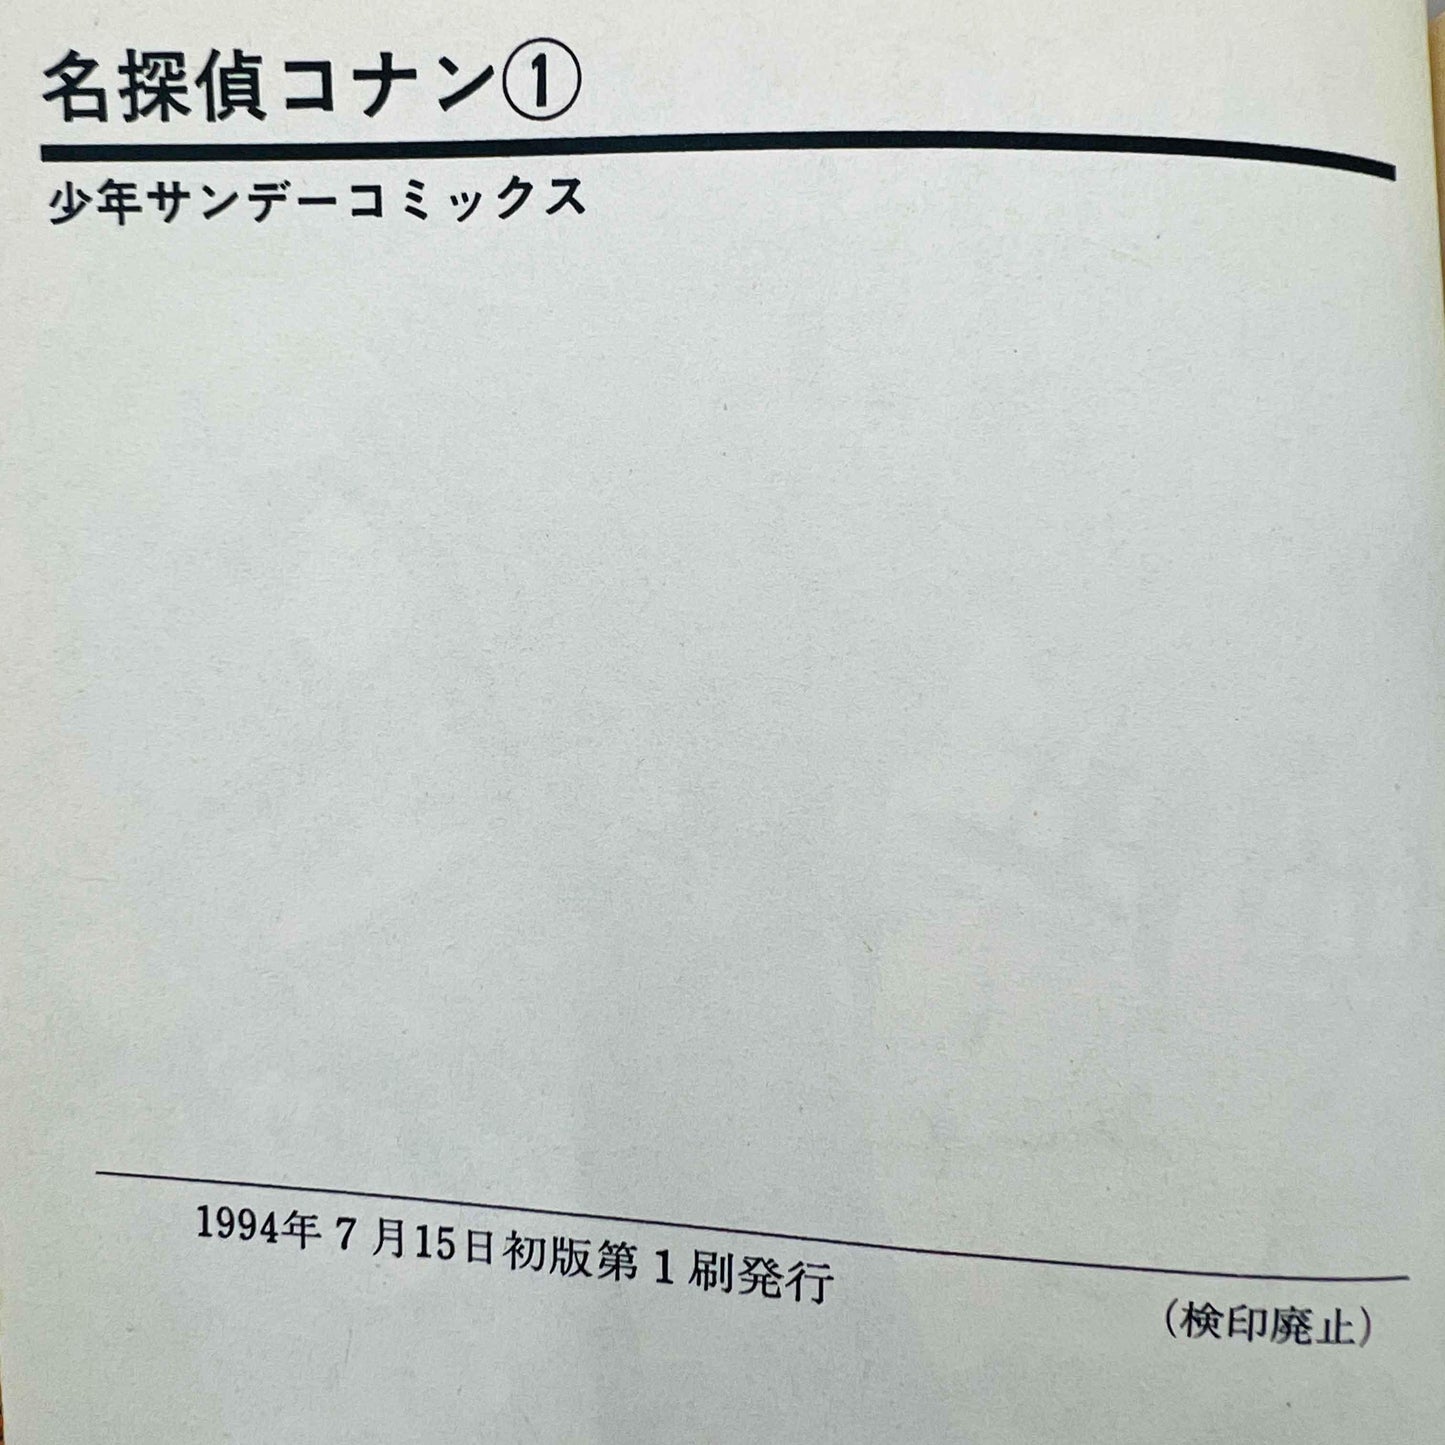 Detective Conan - Volume 01 - 1stPrint.net - 1st First Print Edition Manga Store - M-CONAN-01-003